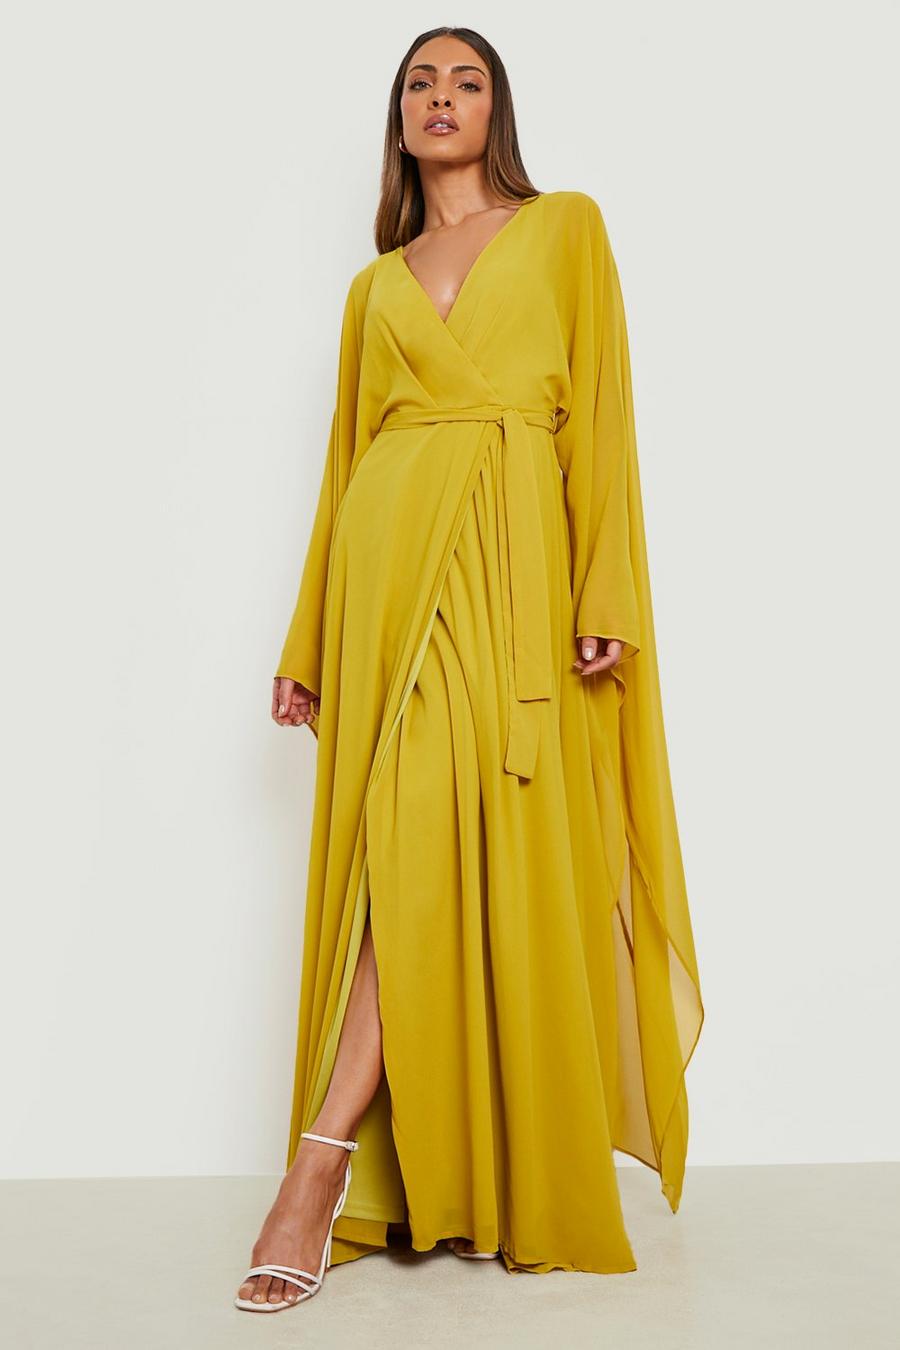 Chartreuse שמלת מקסי מעטפת מבד שיפון עם שרוולי שכמייה